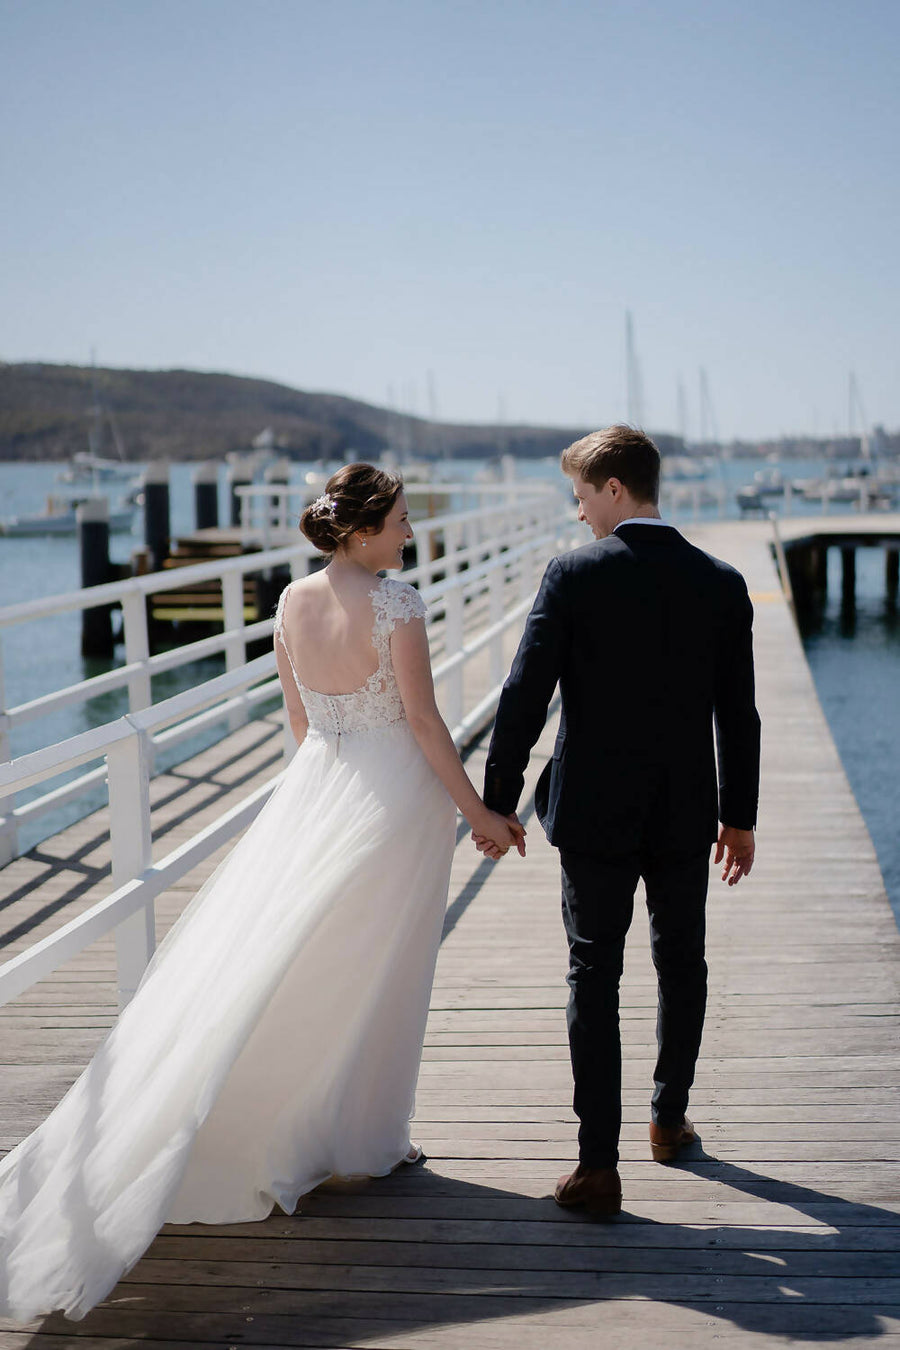 Elopements and Small Wedding Coverage - Elliott Kramer Photo